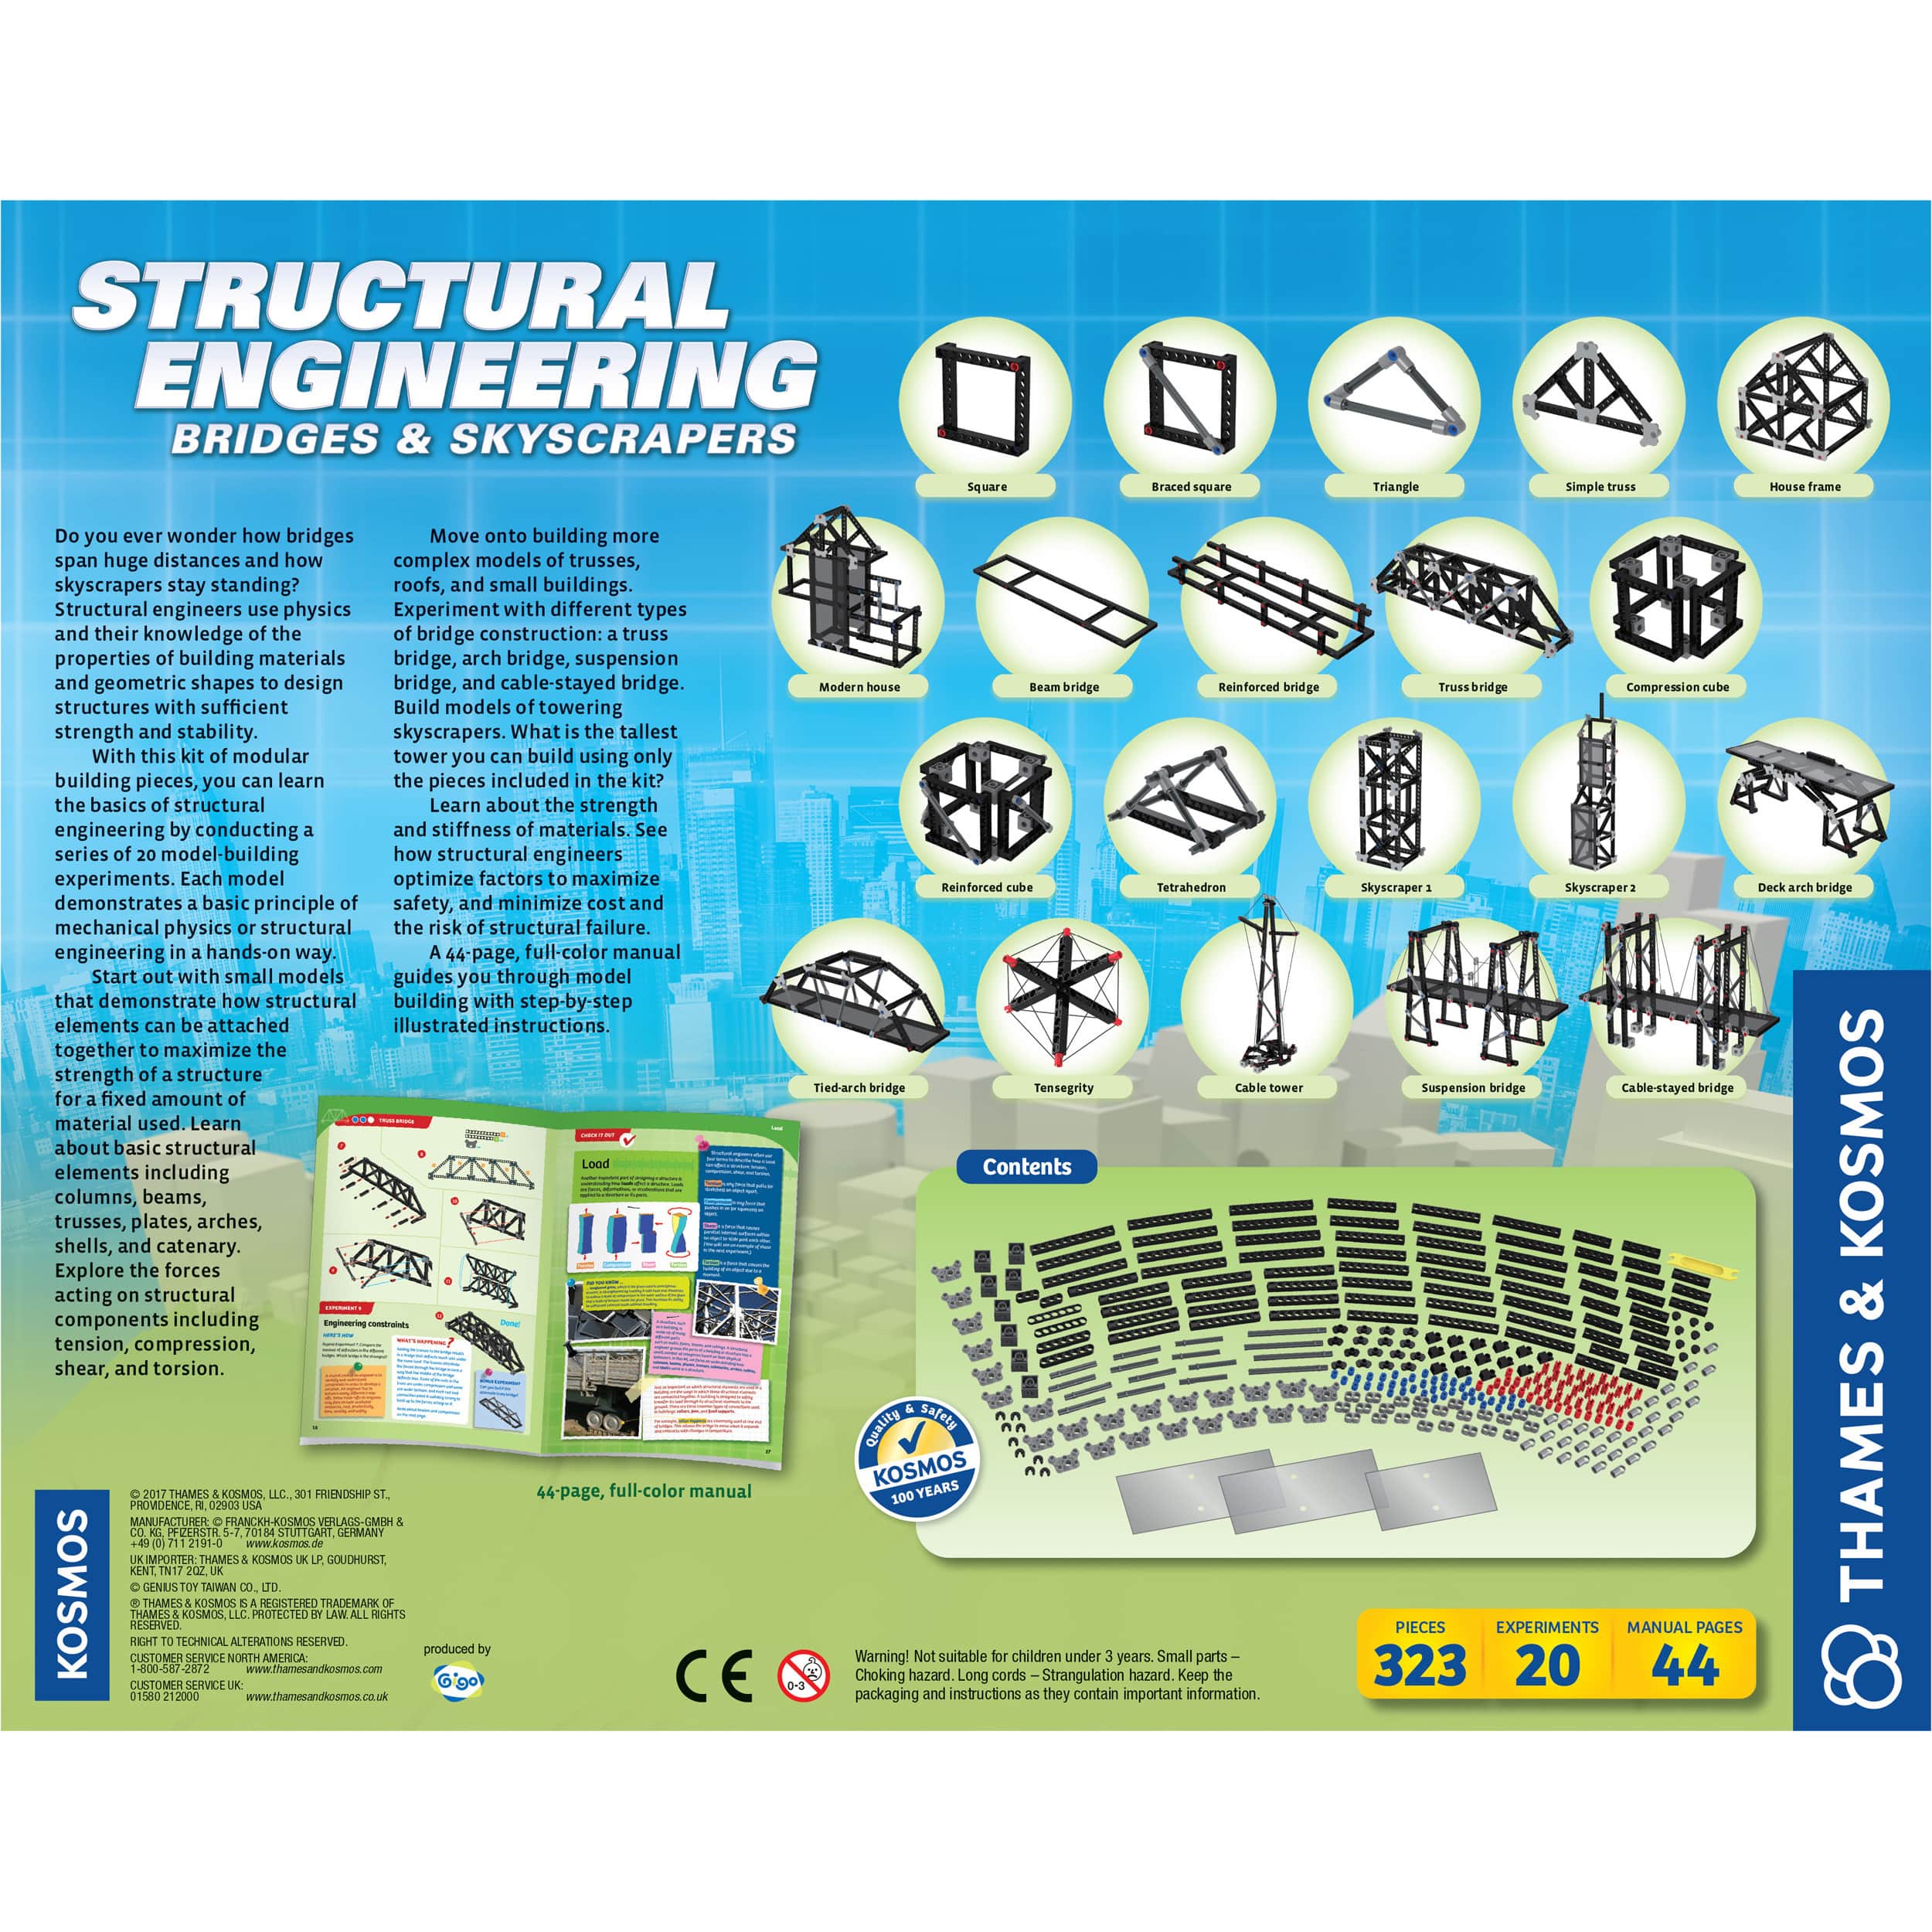 Thames &#x26; Kosmos Structural Engineering: Bridges &#x26; Skyscrapers Kit